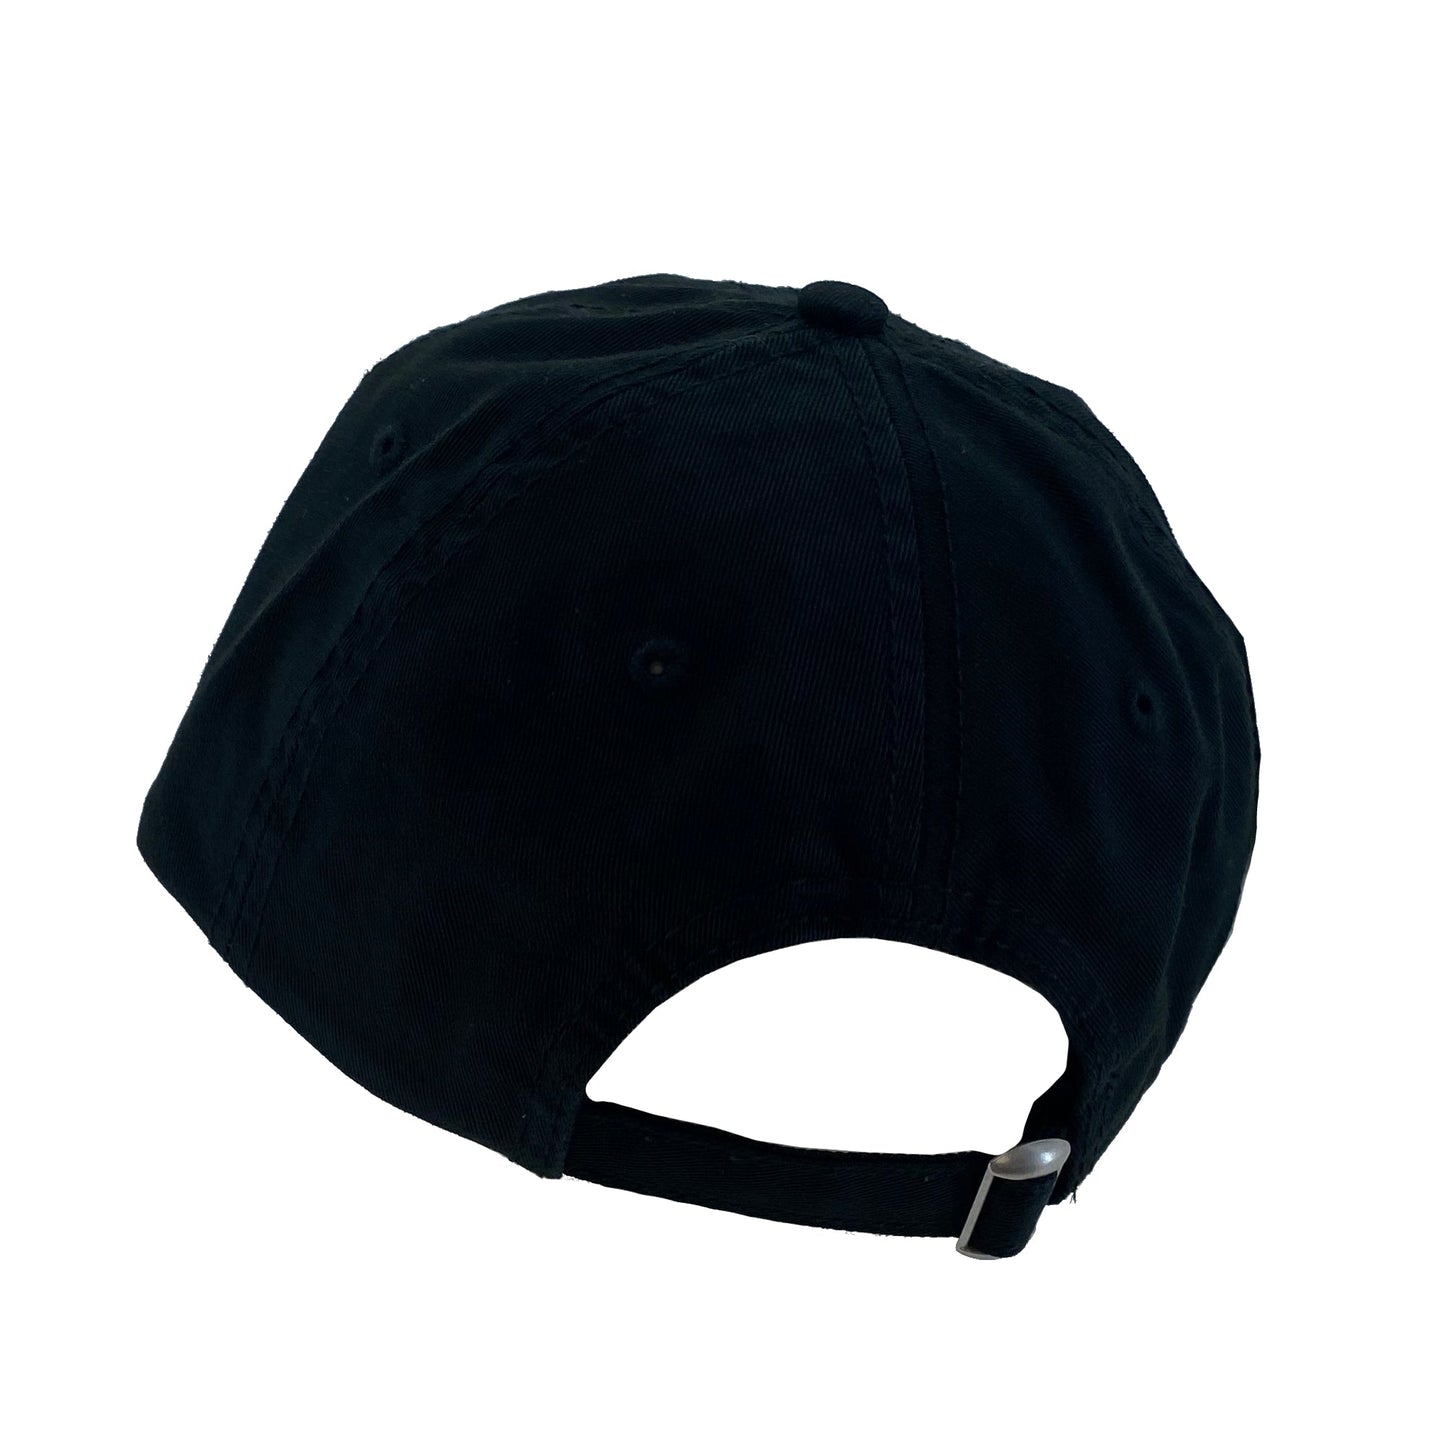 John Deere Unstructured Twill Black Cap - LP70610